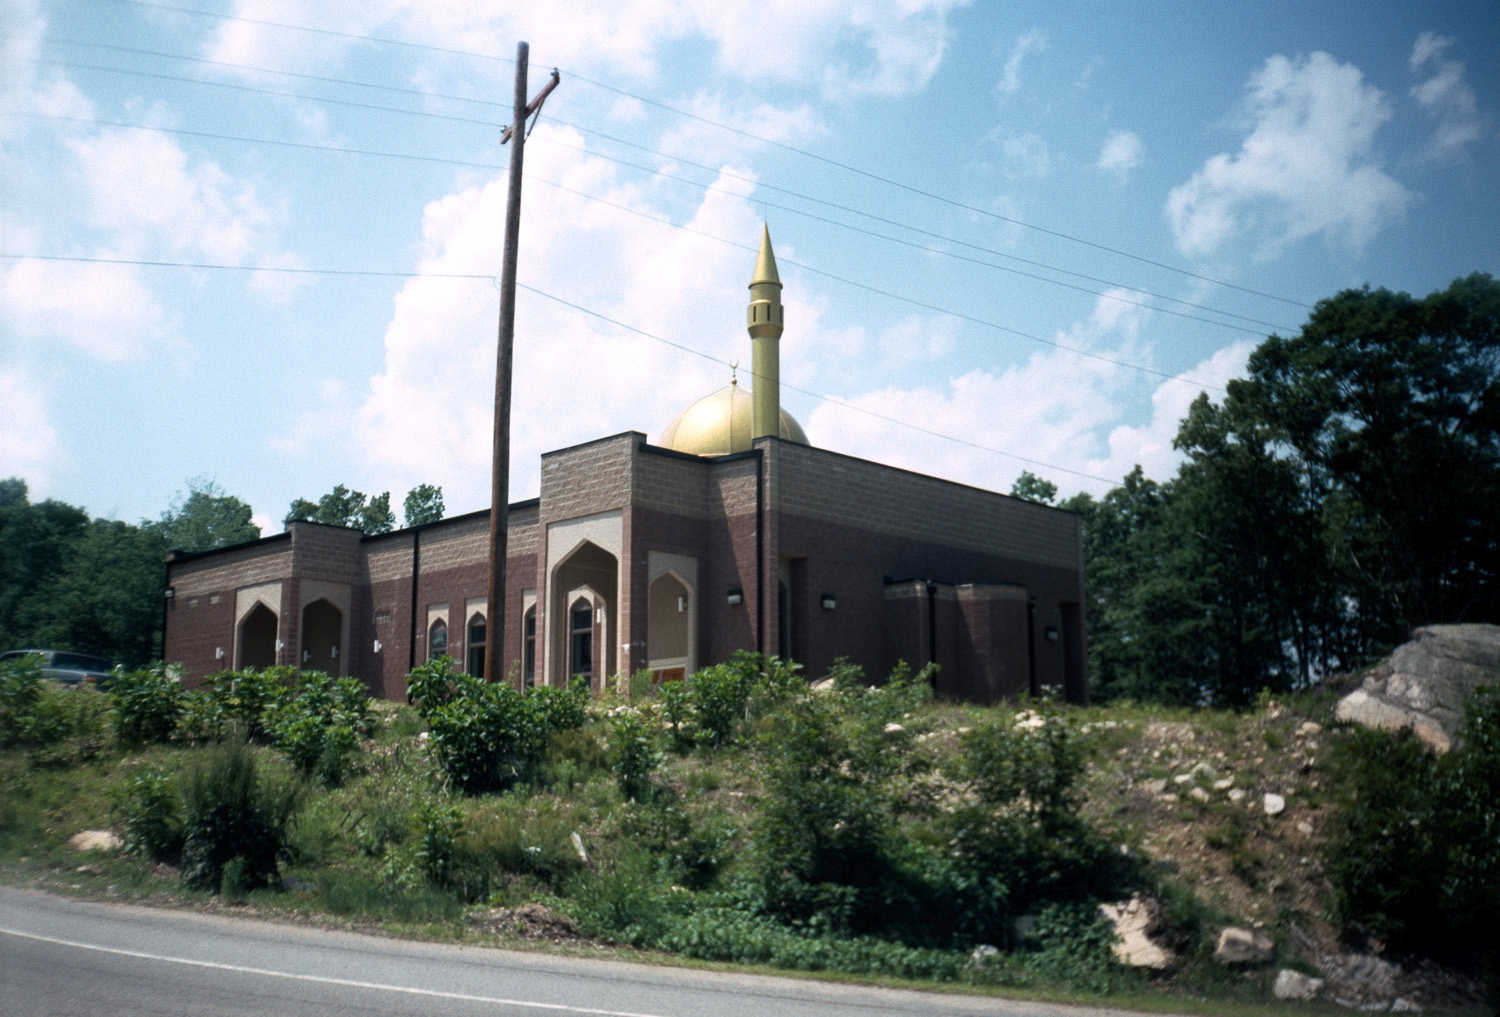 Masjid Al-Islam - View of mosque from road below, looking west